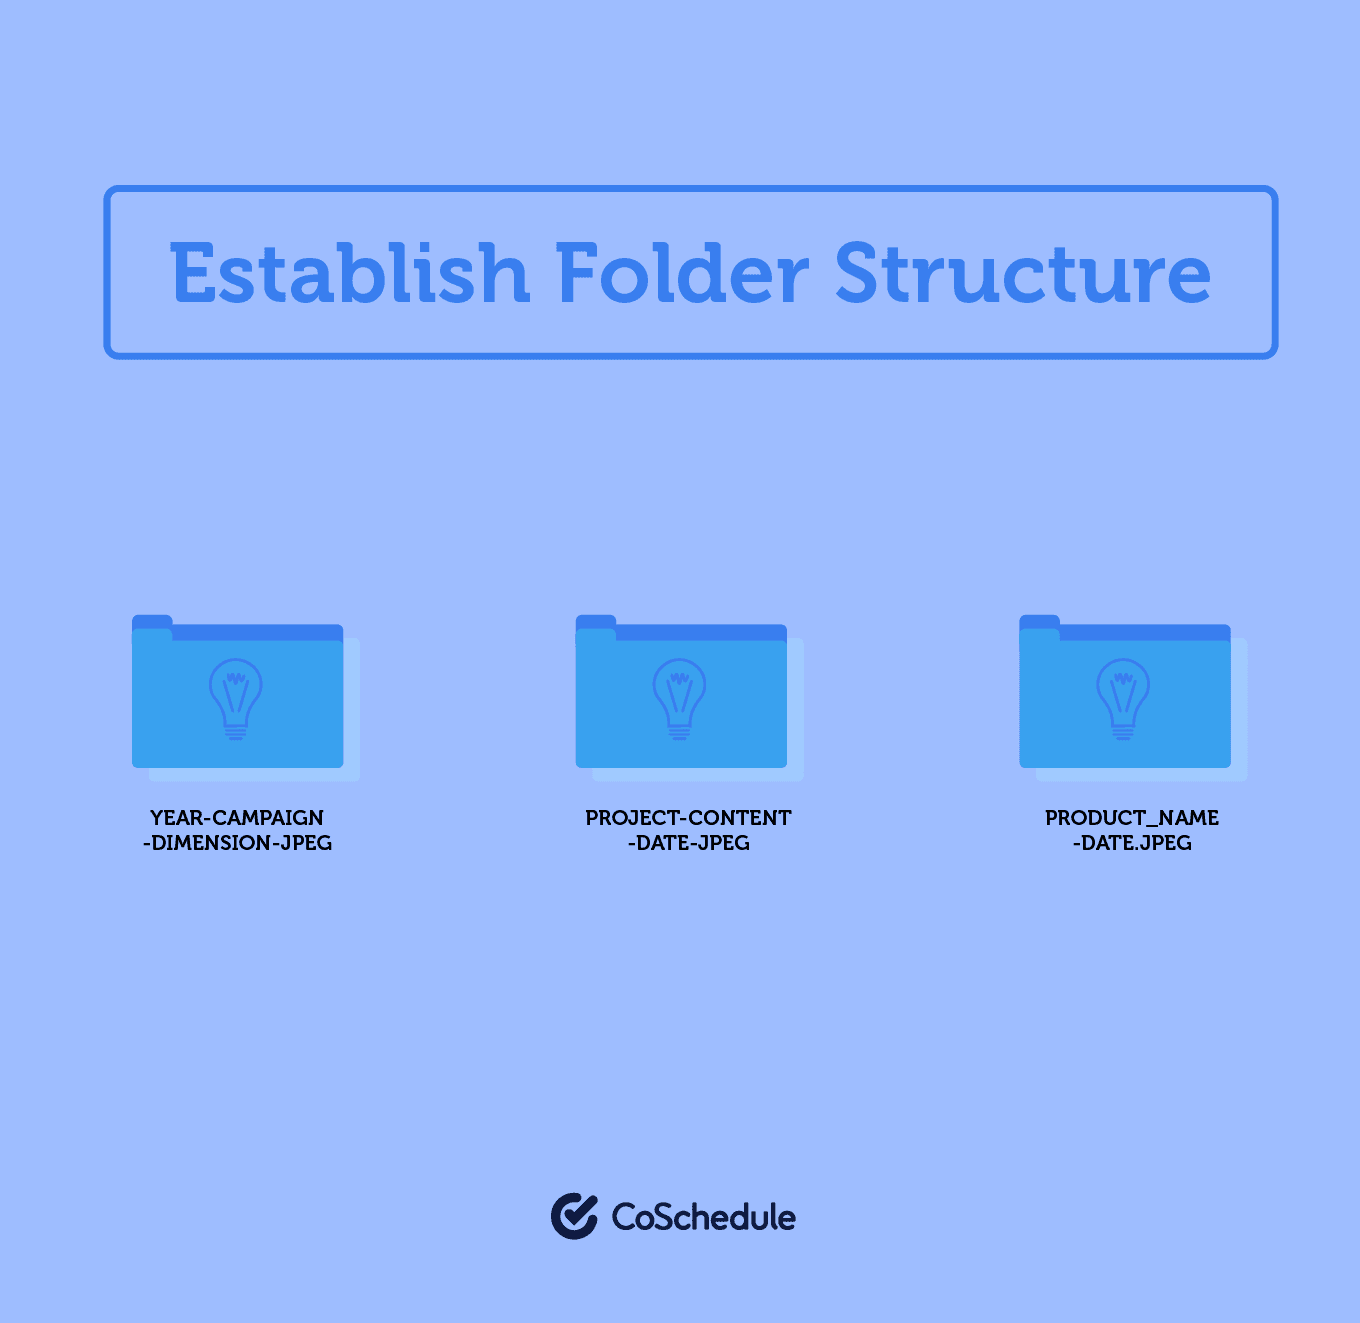 Establish folder structure header with three folders